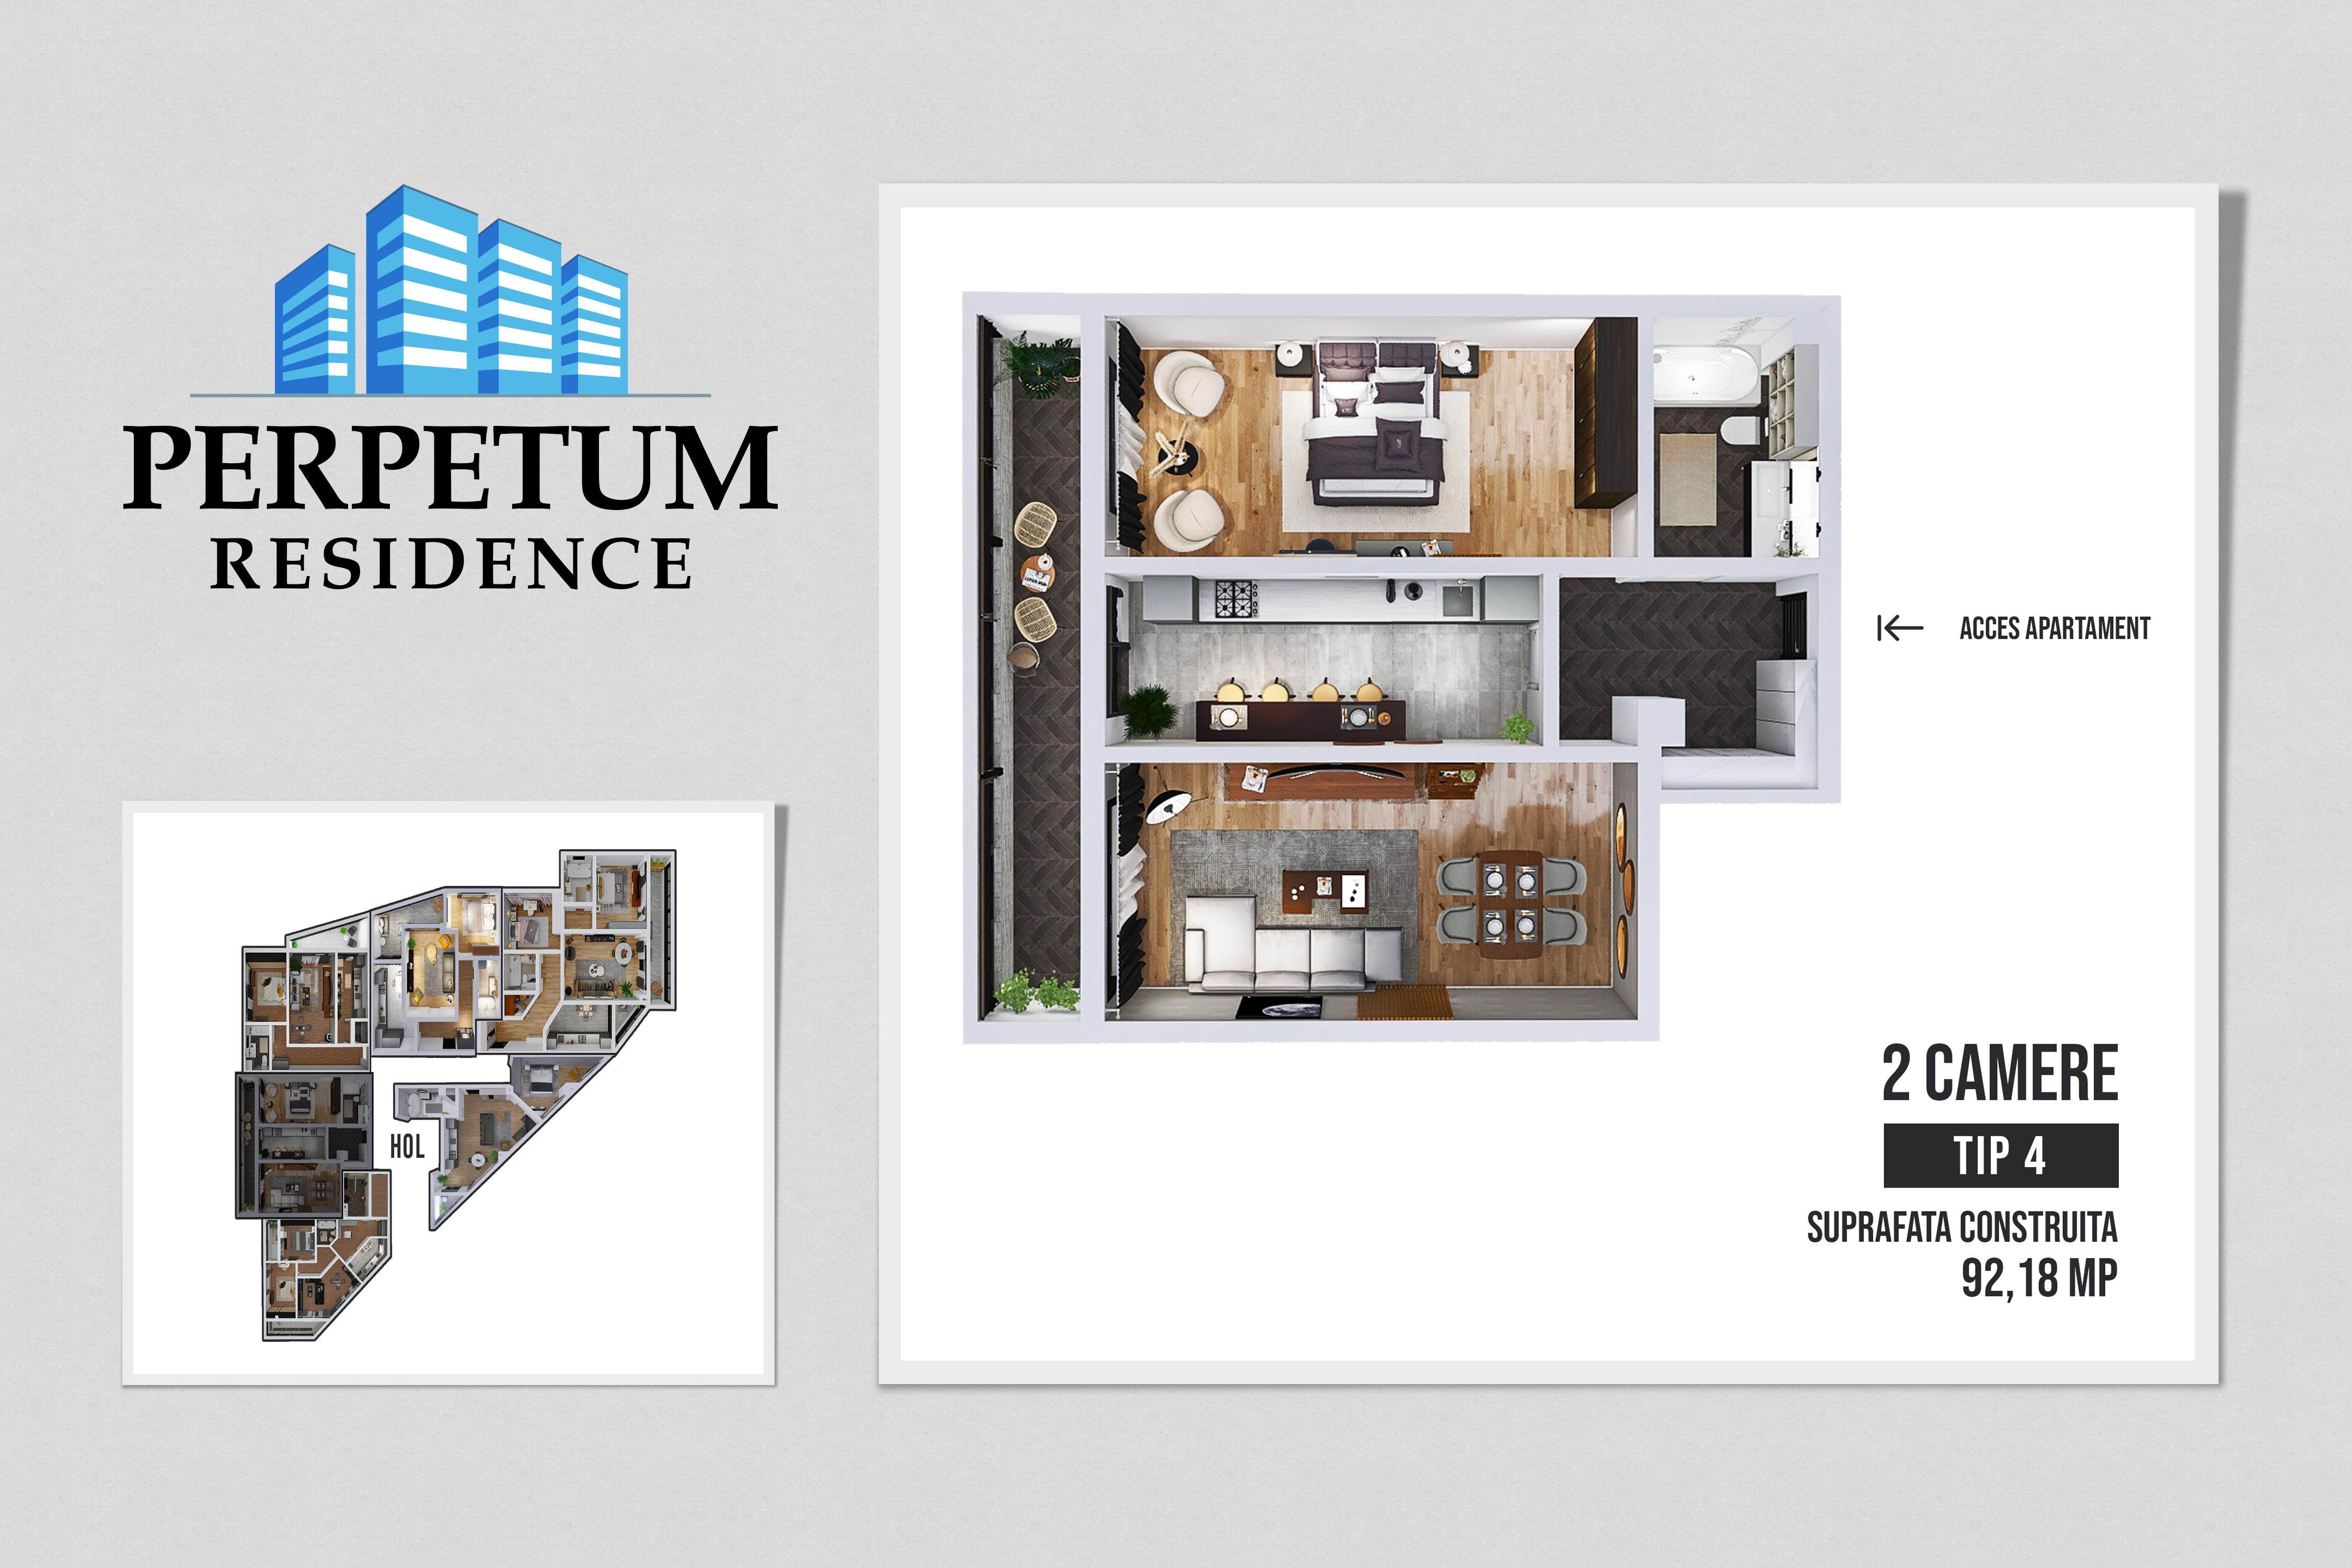 DIRECT DEZVOLTATOR! COMISION 0% Tomis Nord - Apartament cu 2 camere TIP 4 in Complex Perpetum Residence II